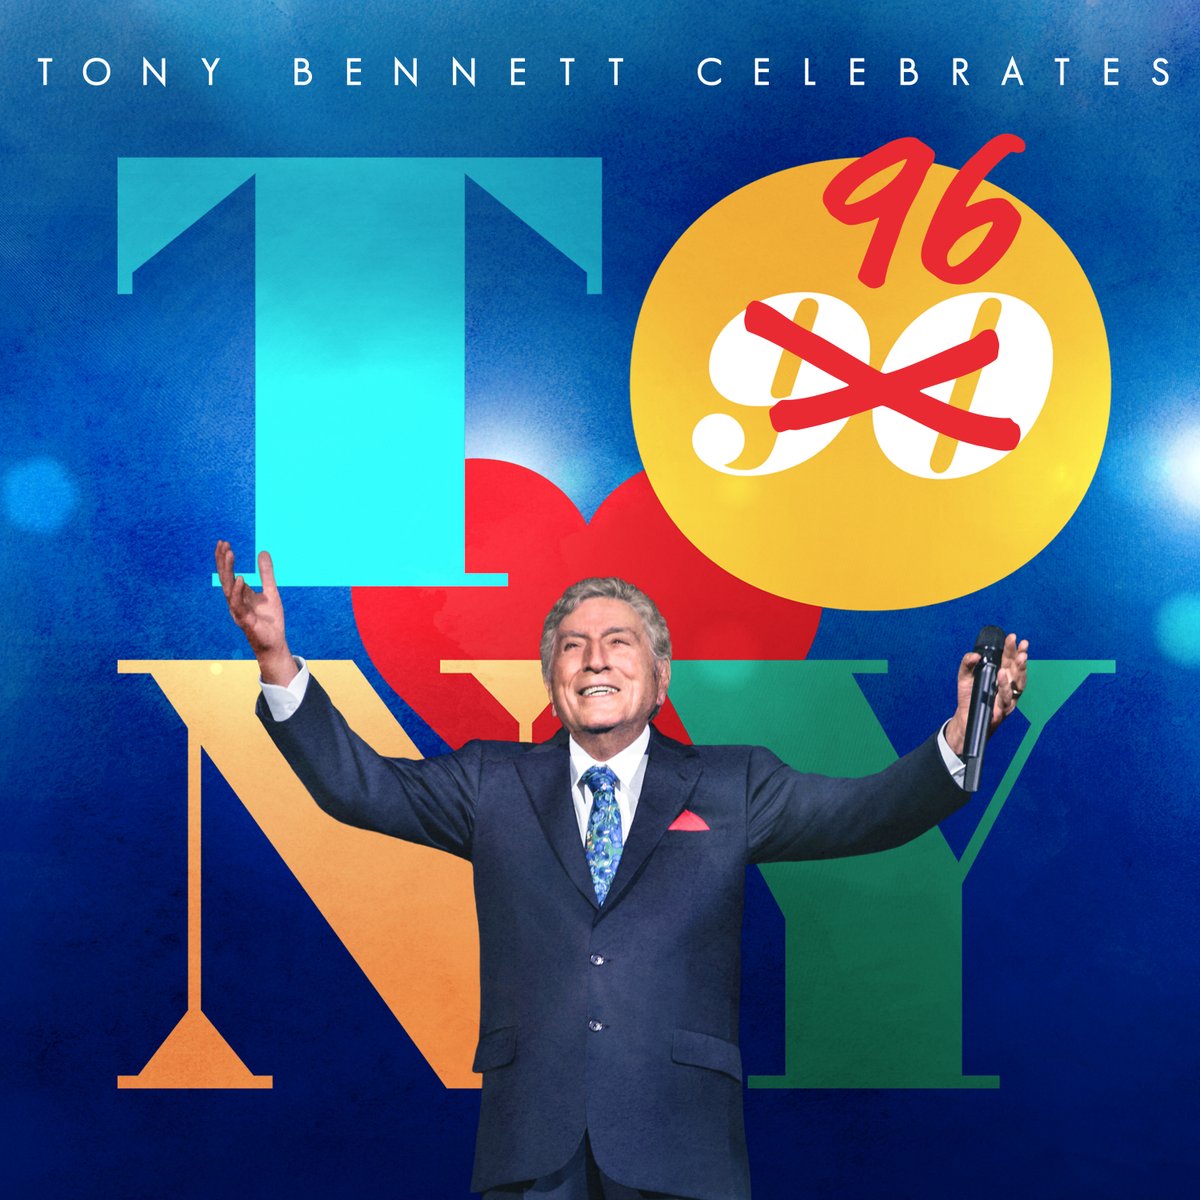 It’s Tony’s 96th Birthday today! Celebrate by listening to his birthday playlist and post your birthday wishes to Tony! #Tony96
tonybennett.lnk.to/96thBirthday